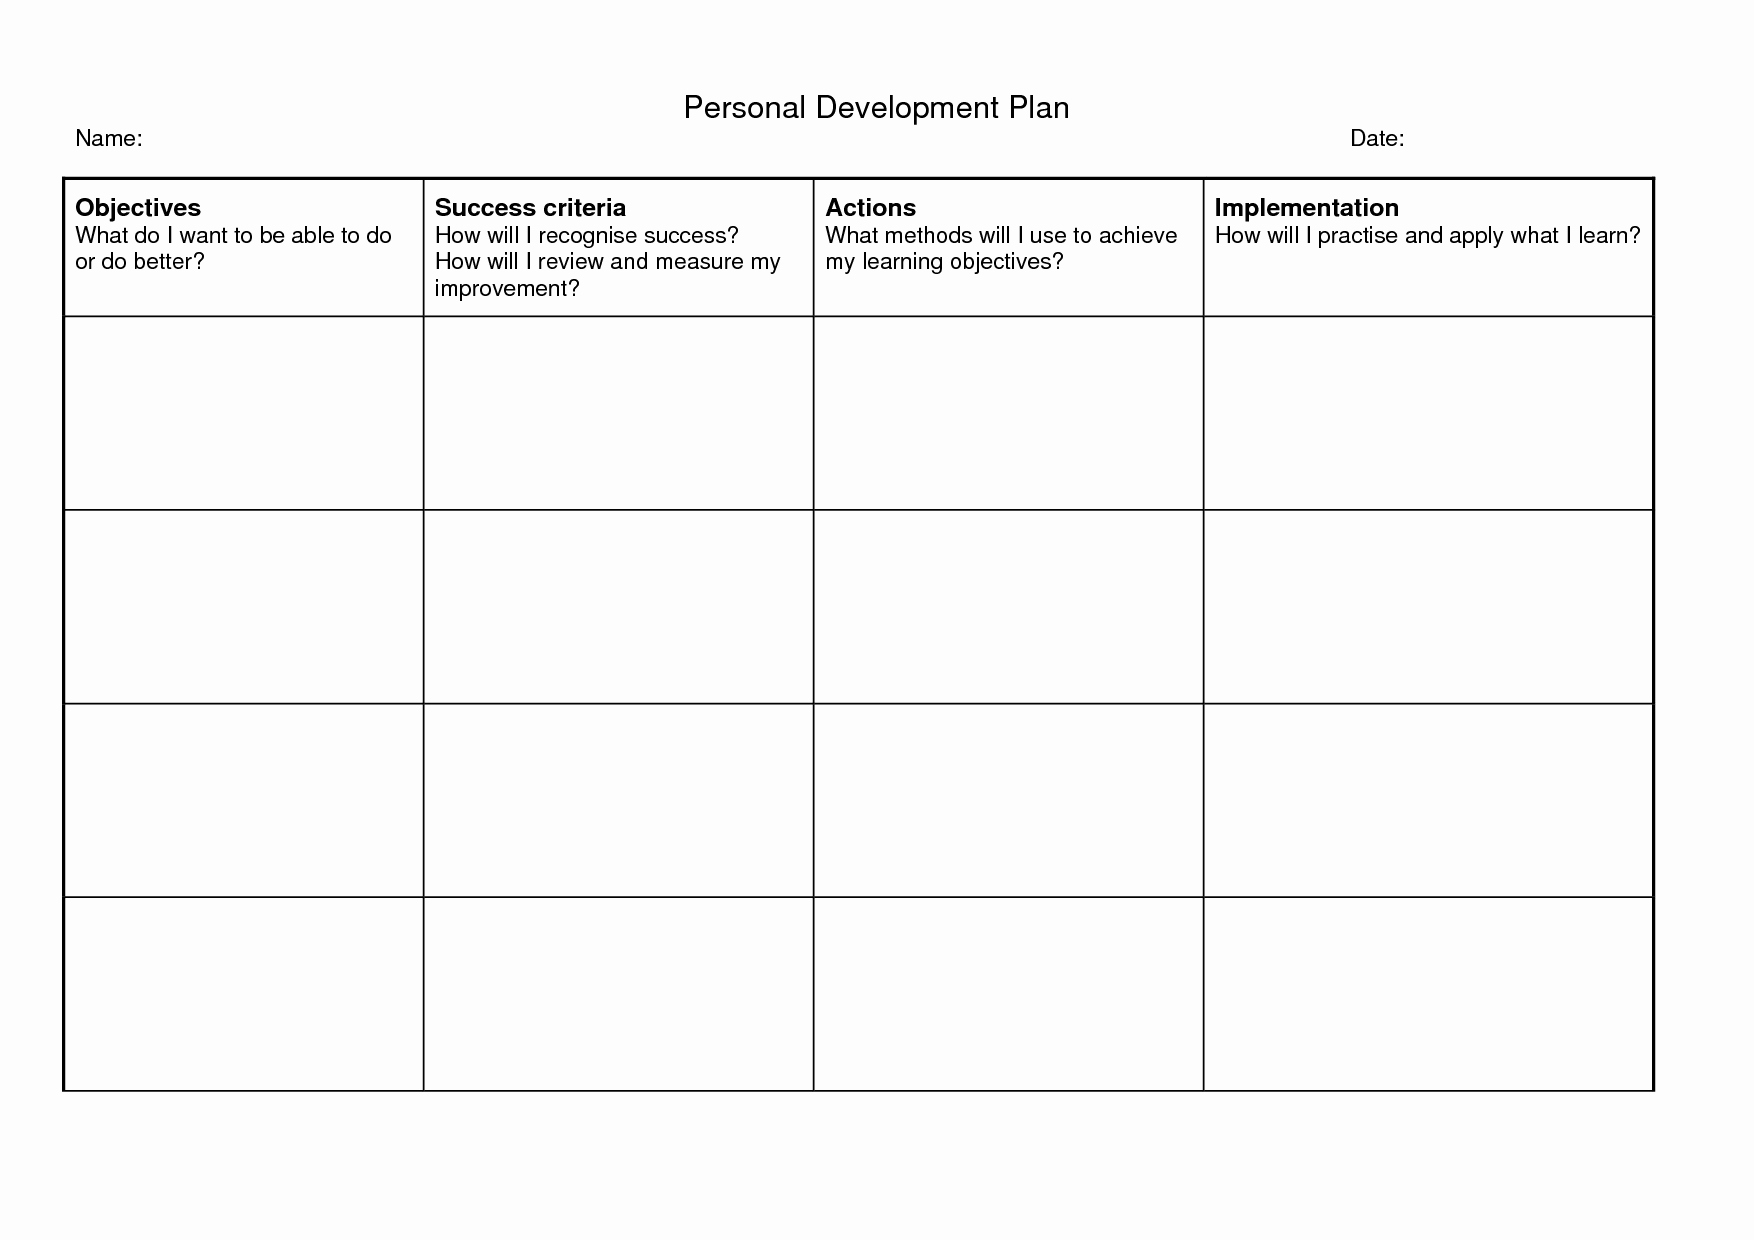 Personal Strategic Plan Template Inspirational 6 Free Personal Development Plan Templates Excel Pdf formats